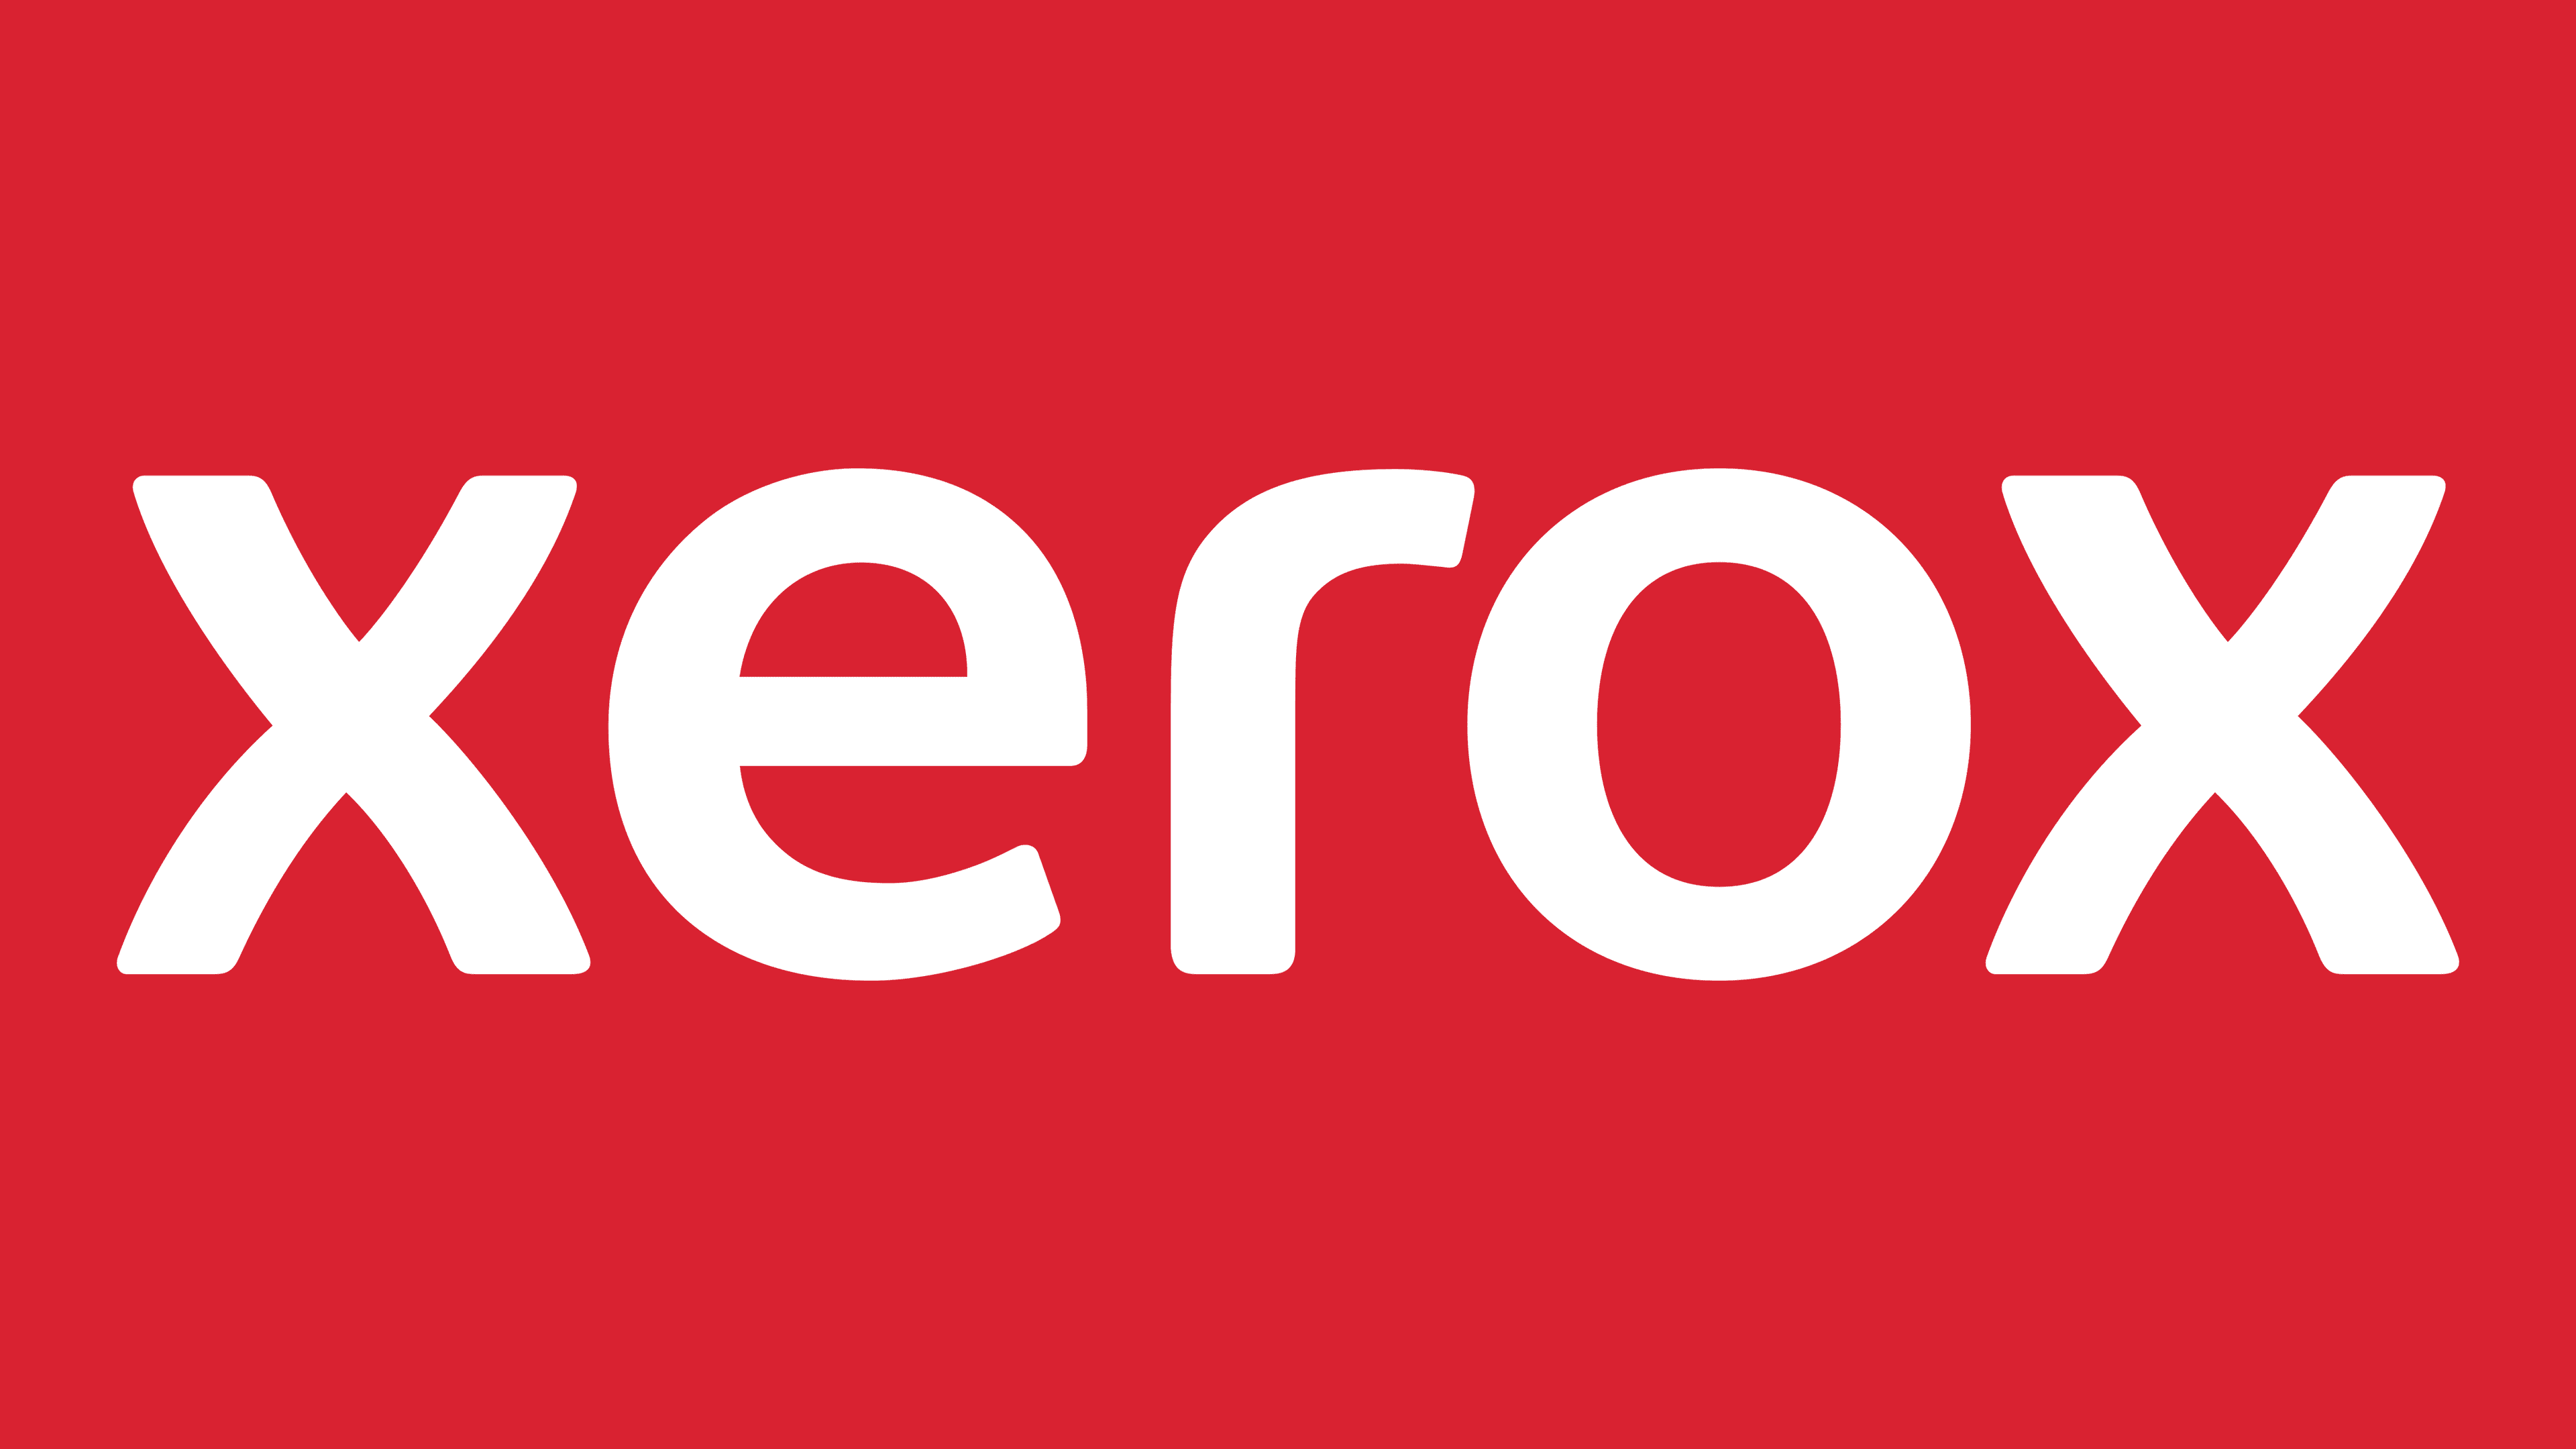 Photocopieur Xerox Vannes , Quimper, Lorient